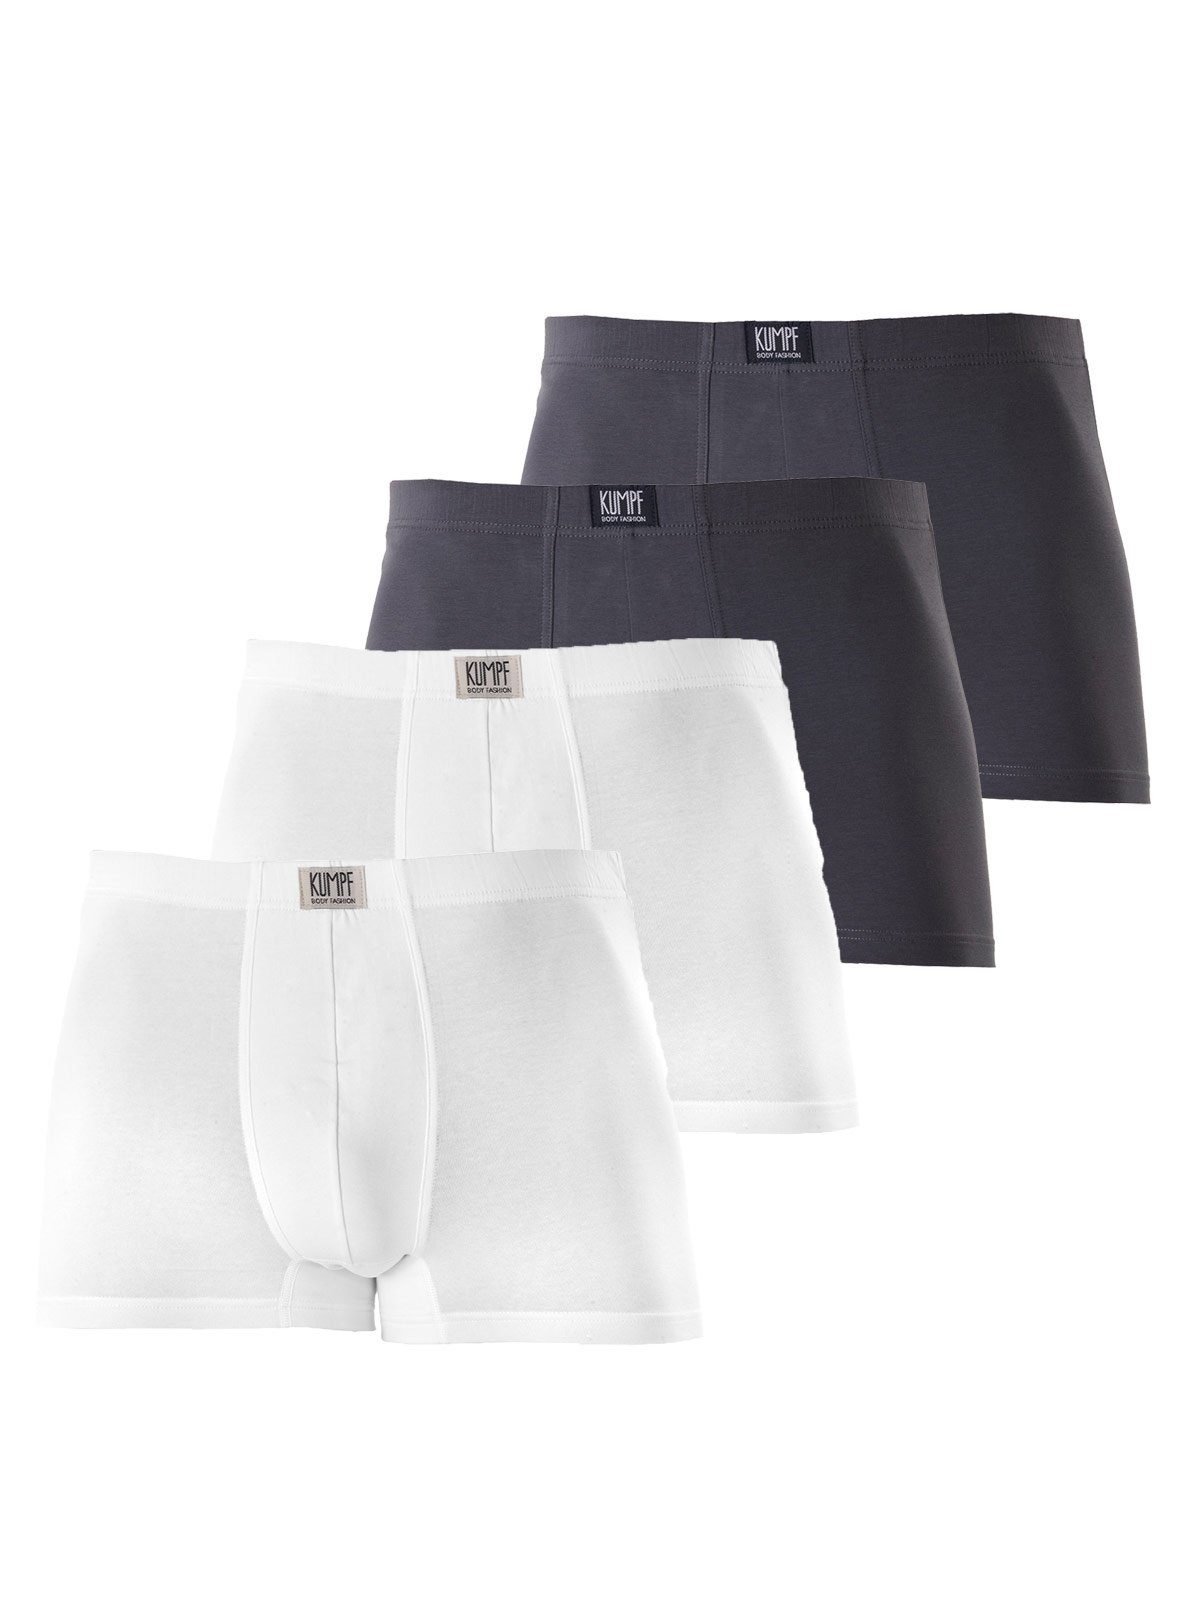 Pants Retro hohe 4er Cotton 4-St) Pants (Spar-Set, Markenqualität Herren KUMPF Sparpack weiss mittelgrau Bio